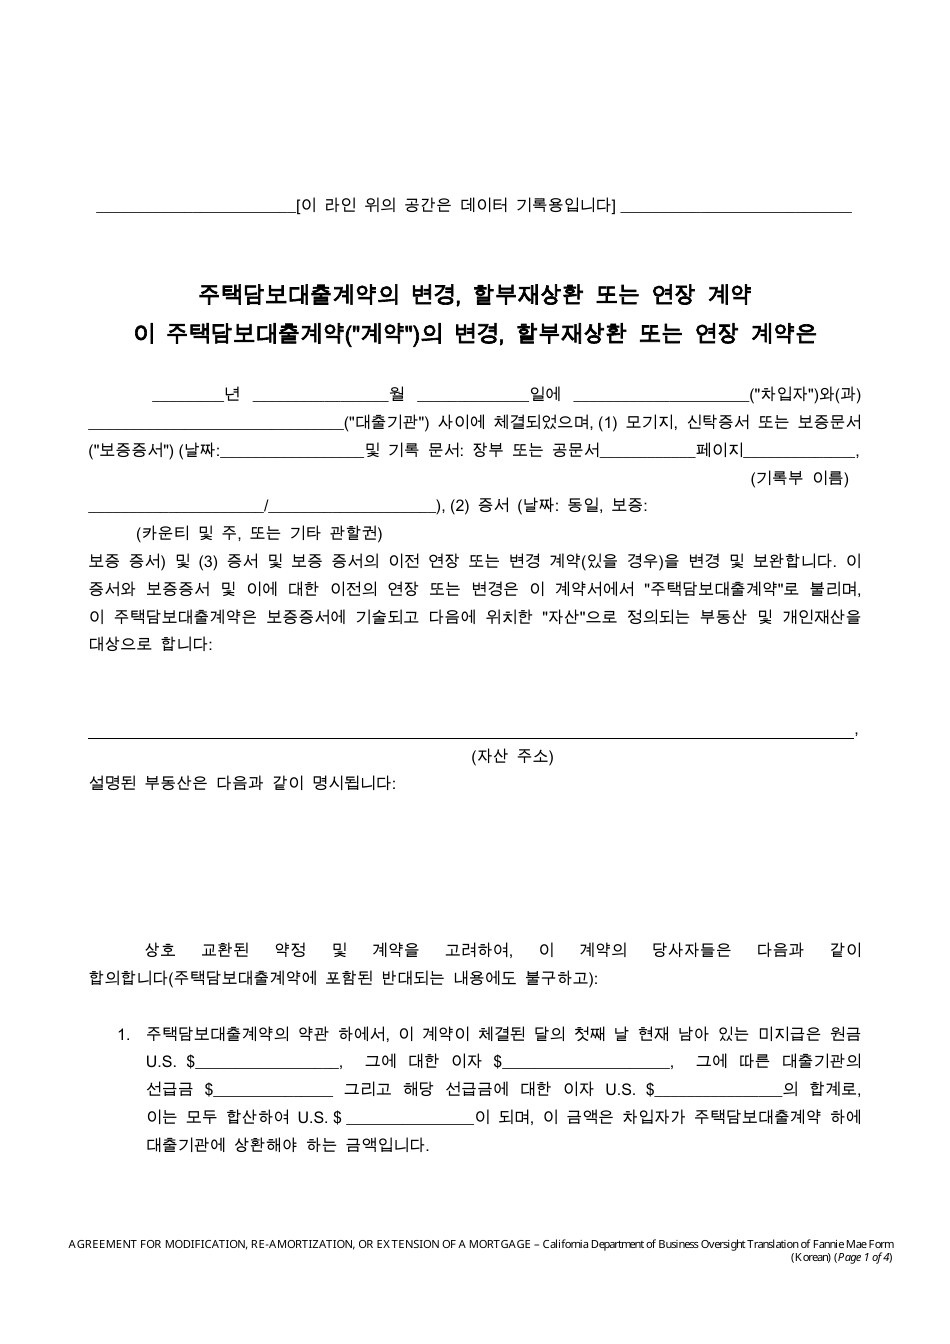 Form DBO-CRMLA8019 Fannie Mae Mortgage Modification, Re-amortization or Extension Form - California (Korean), Page 1